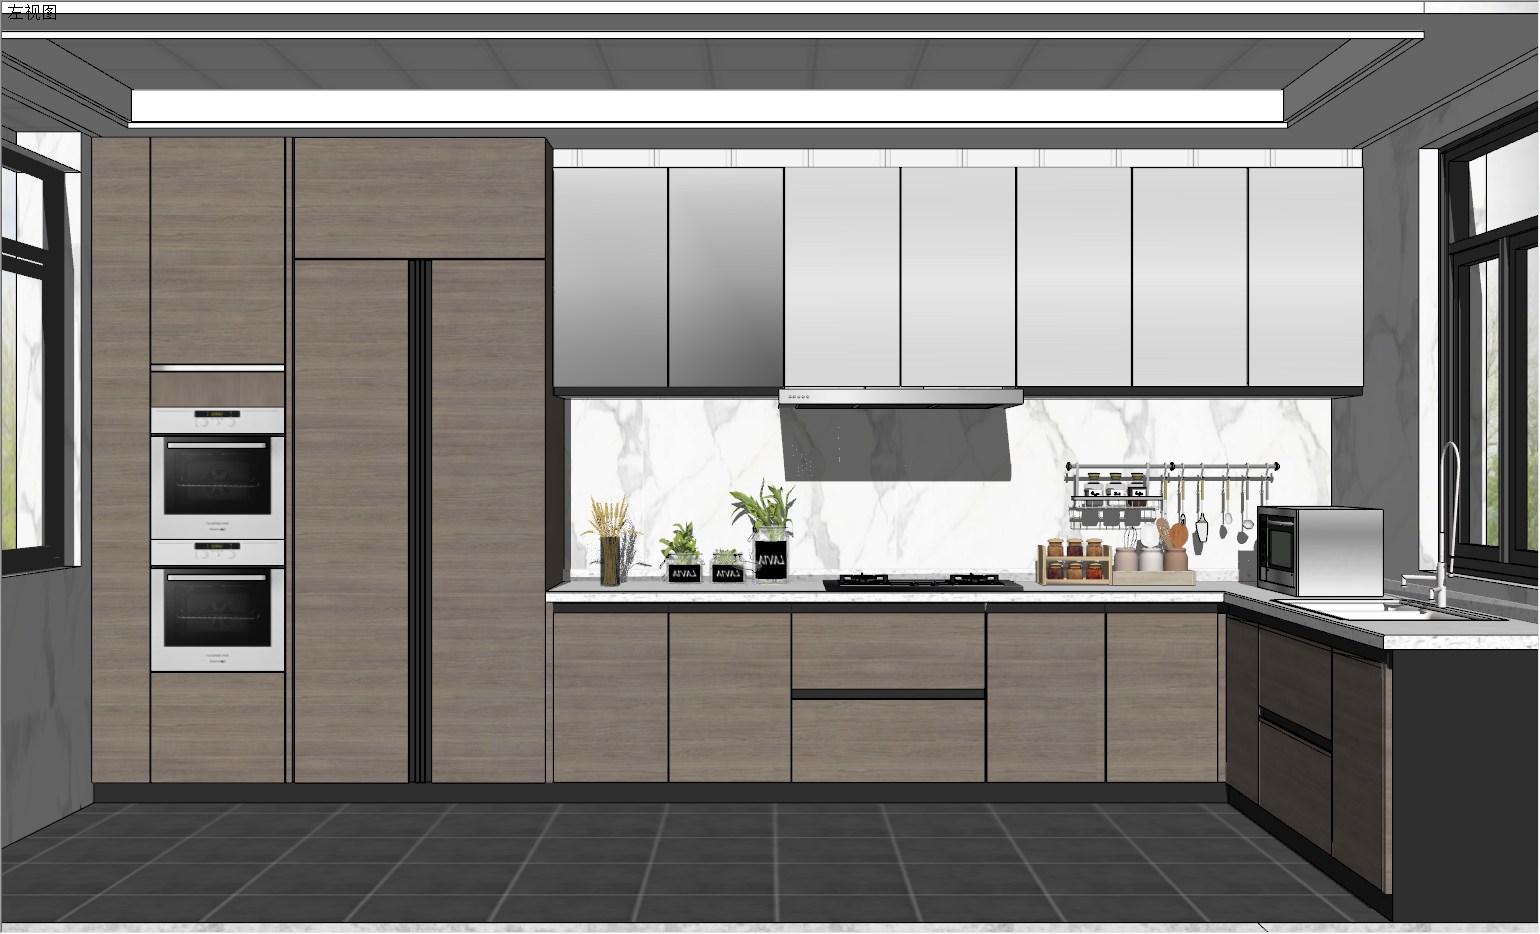 SketchUp design of a kitchen